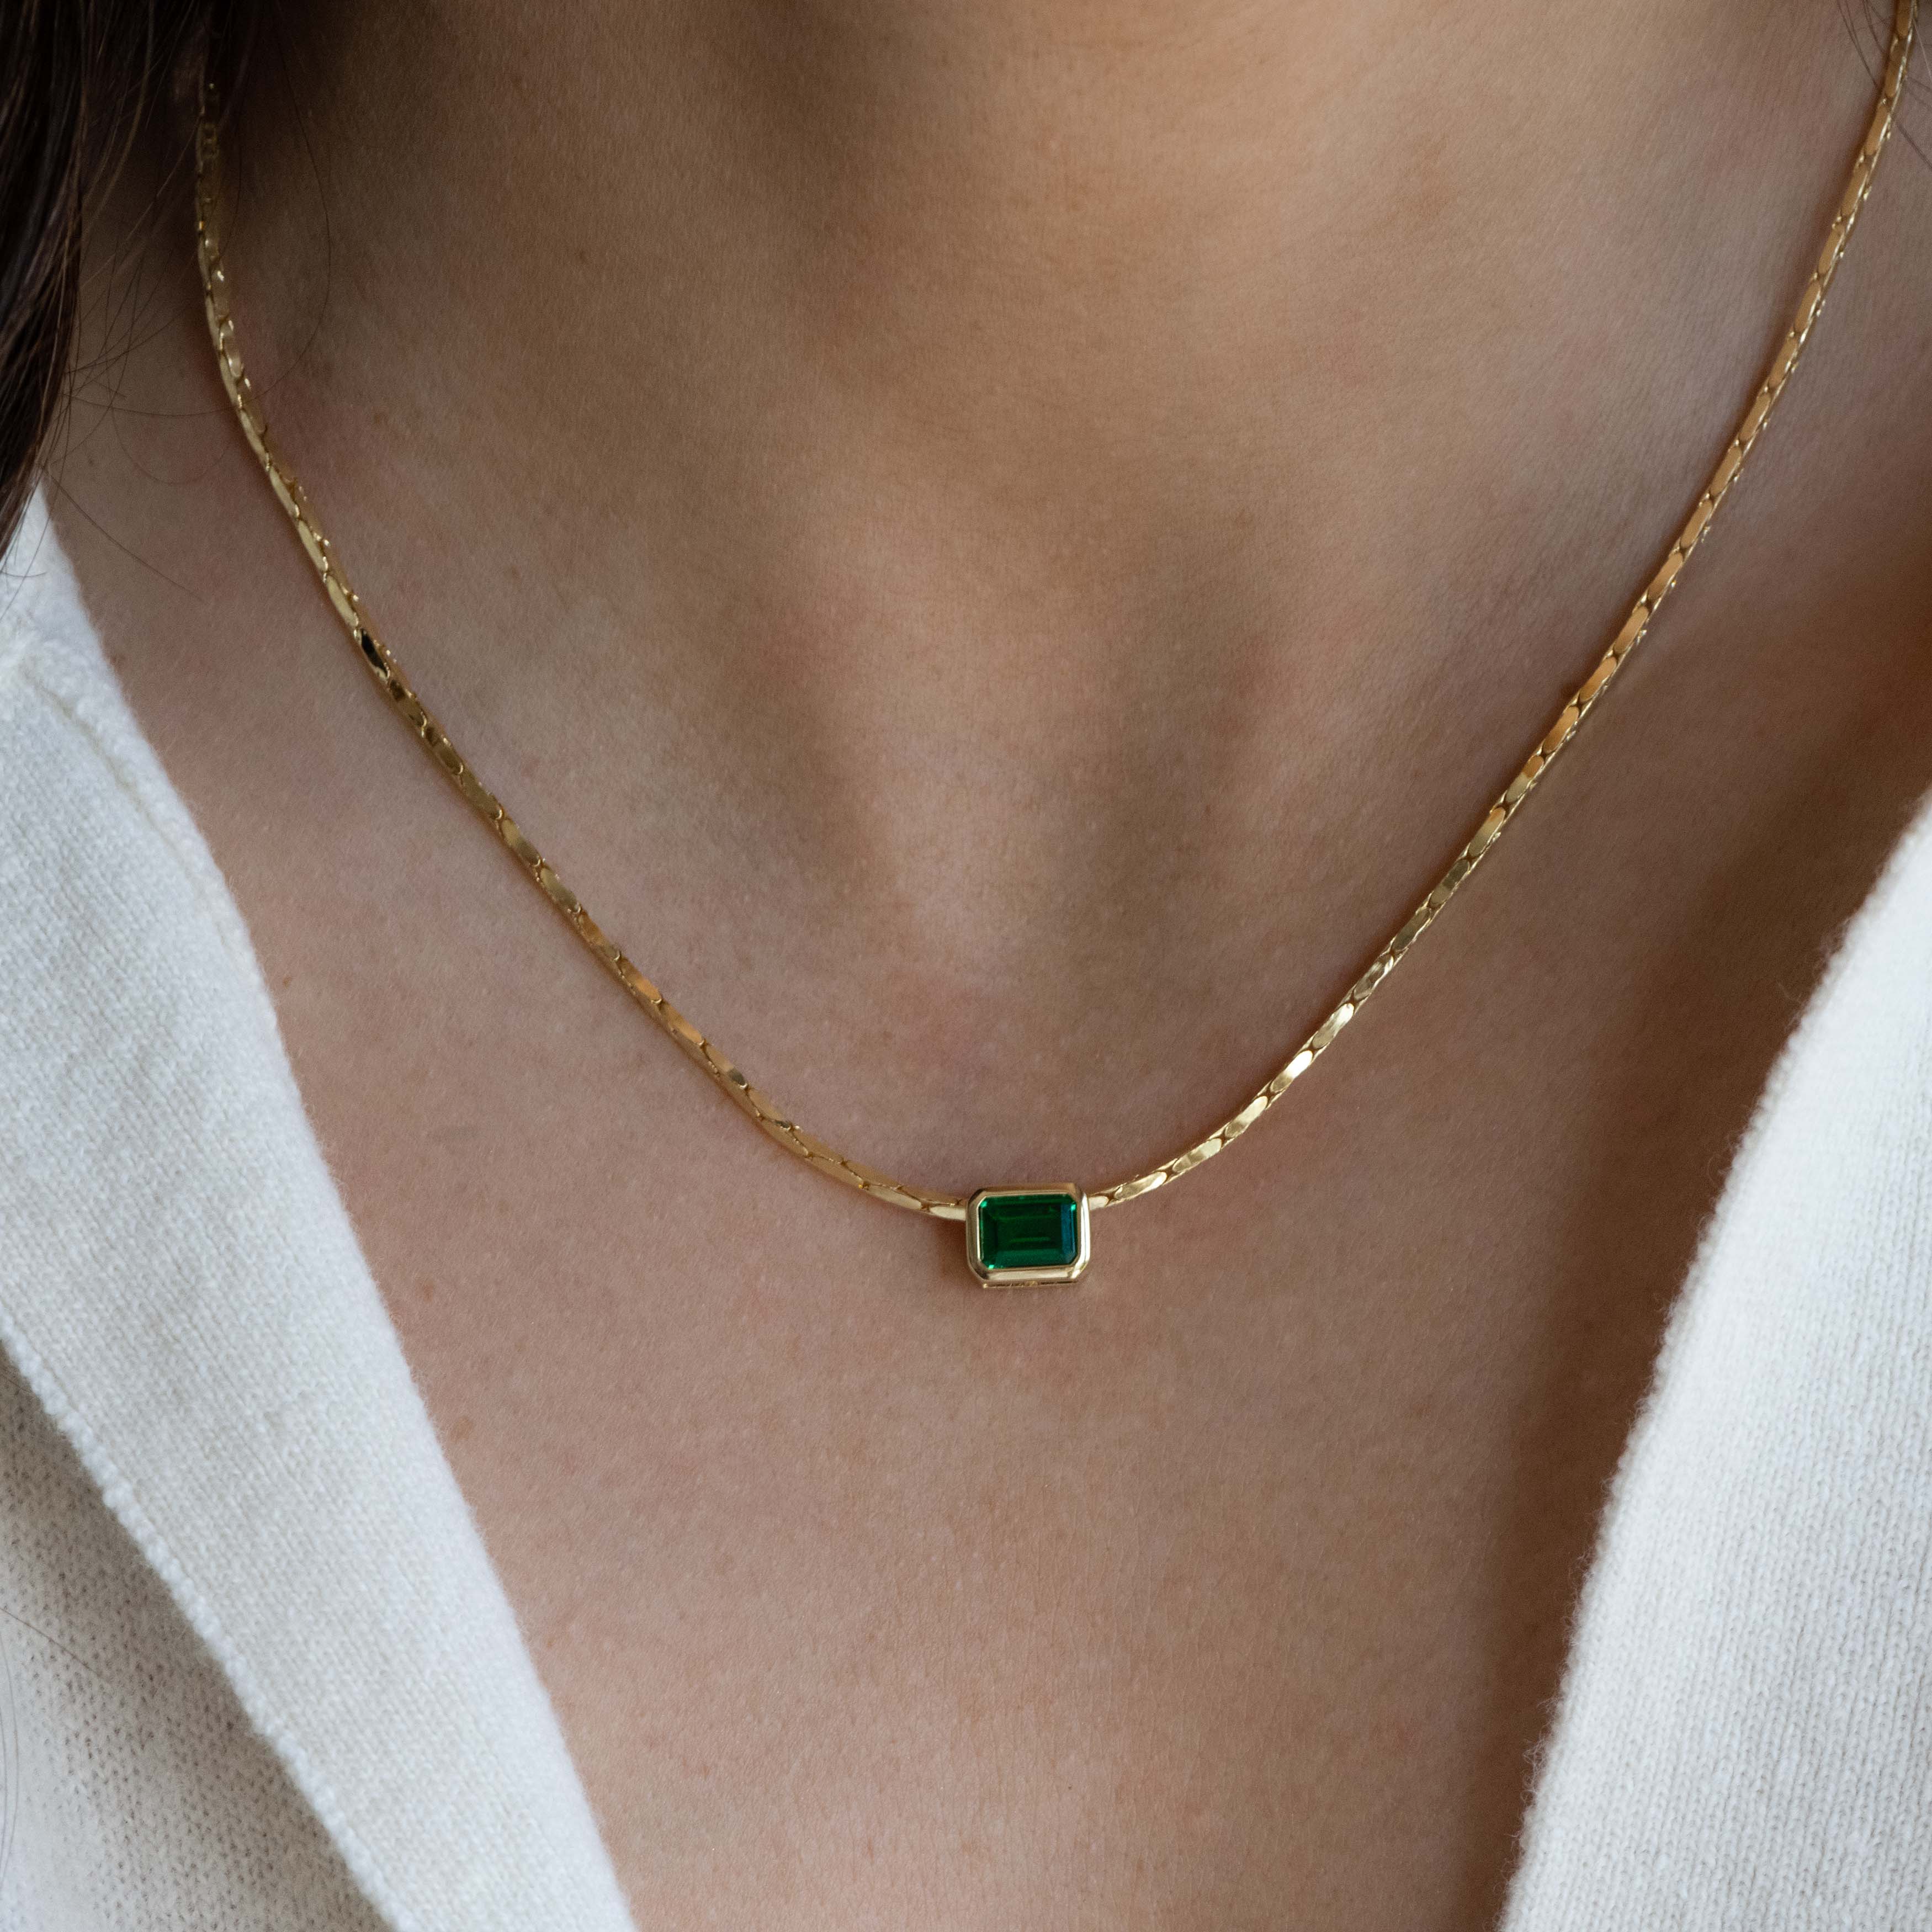 Fancy cut cz and emerald necklace set -